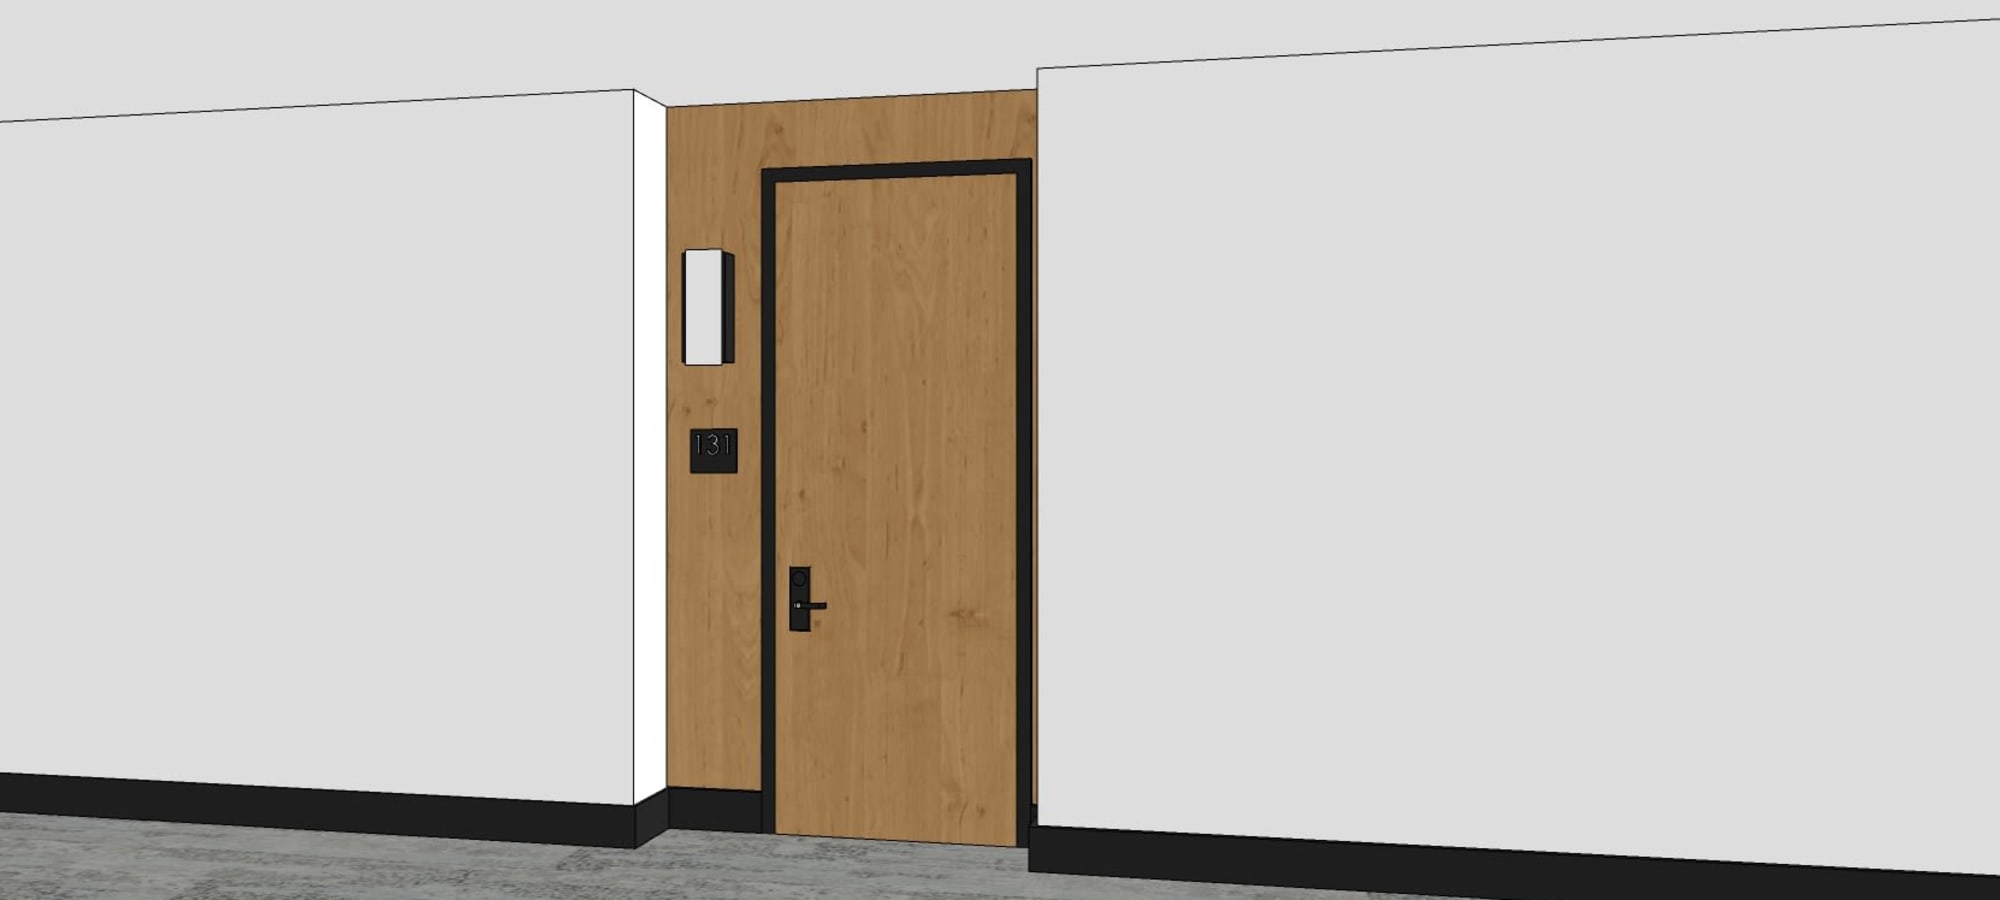 Rendering of a unit entrance with smart keyless door entry at Banyan on Washington in Phoenix, Arizona